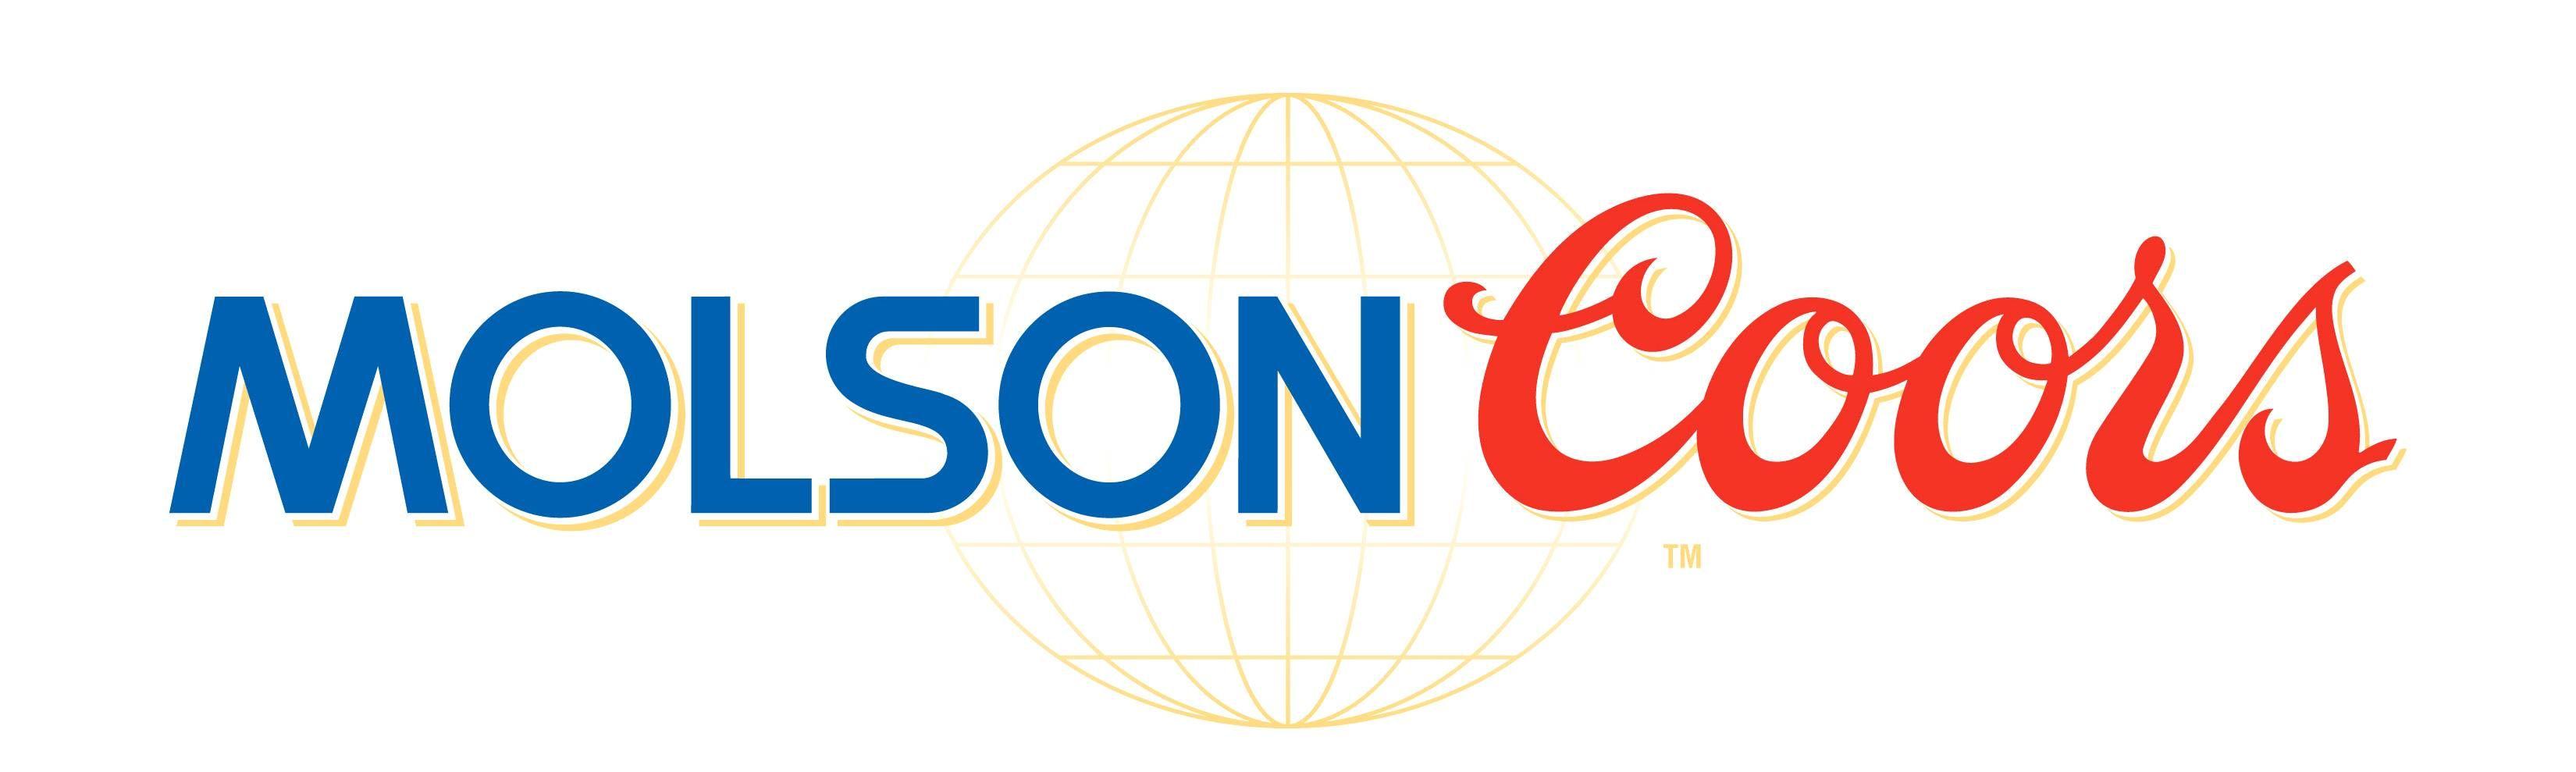 Coors Logo - Molson Coors Logo. TalentEgg Career Incubator